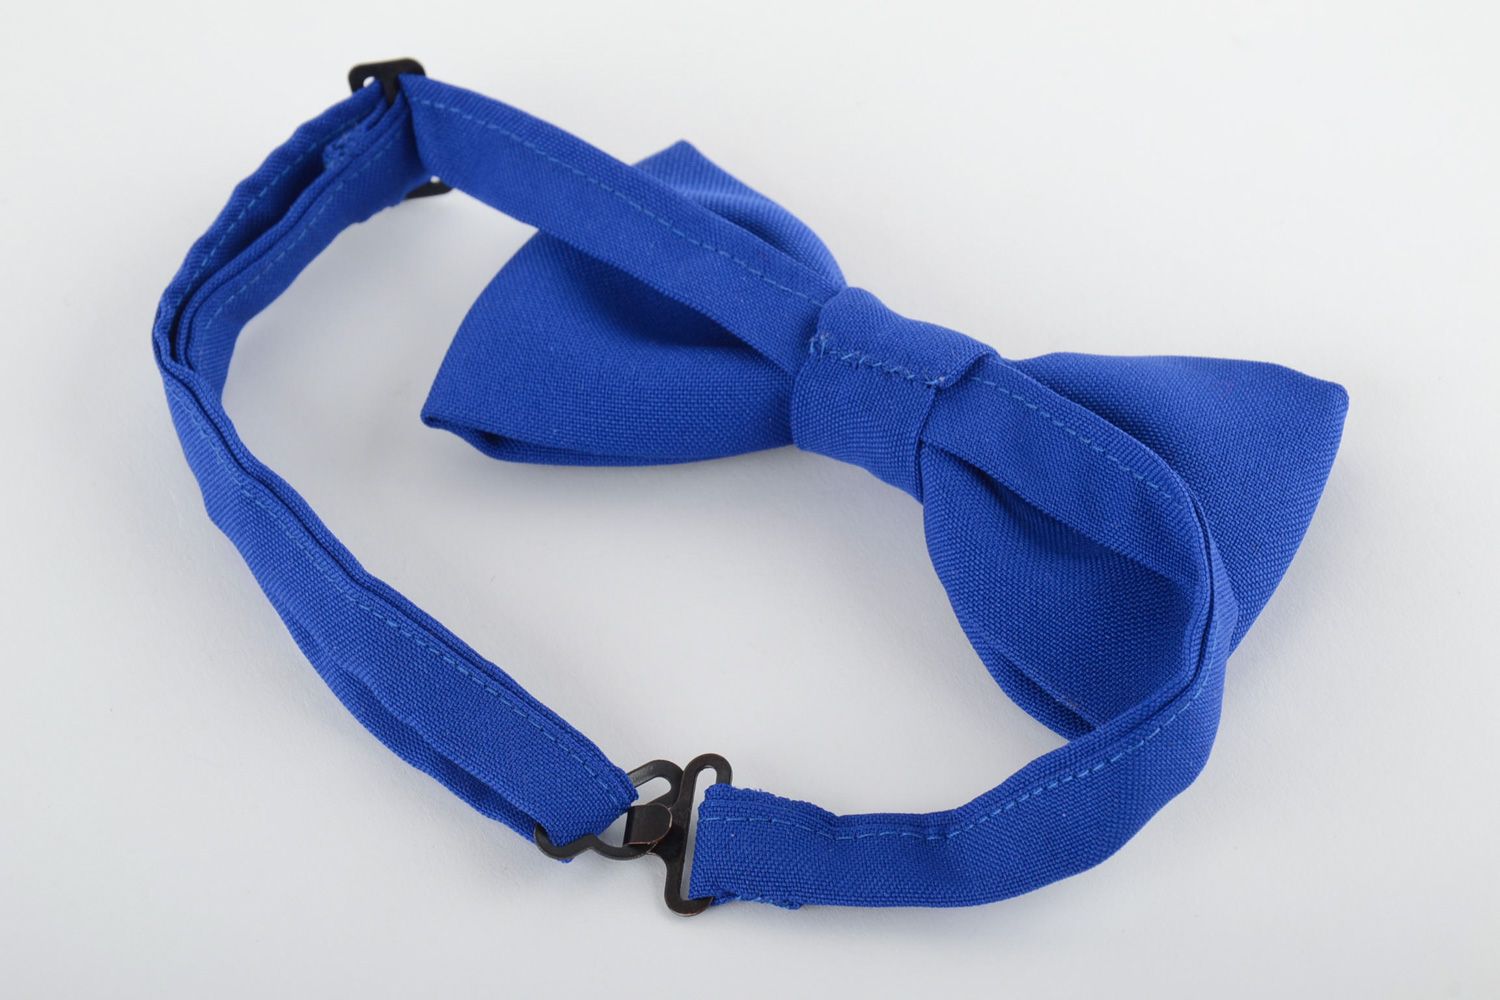 Festive handmade bow tie sewn of bright blue costume fabric for stylish men photo 3